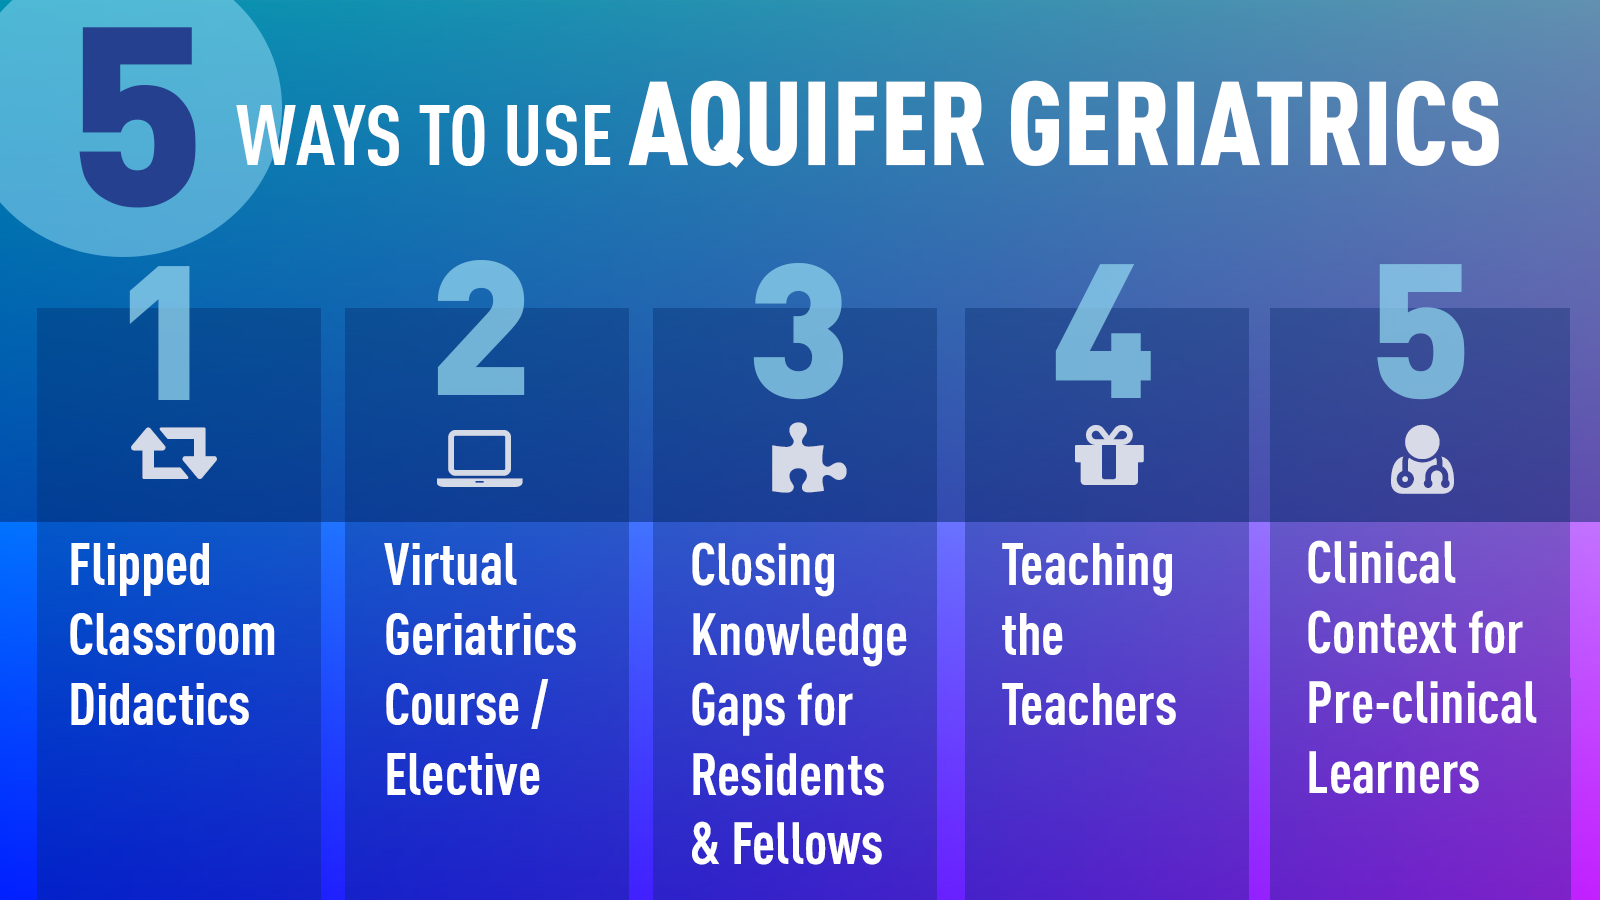 5 Ways to Use Aquifer Geriatrics